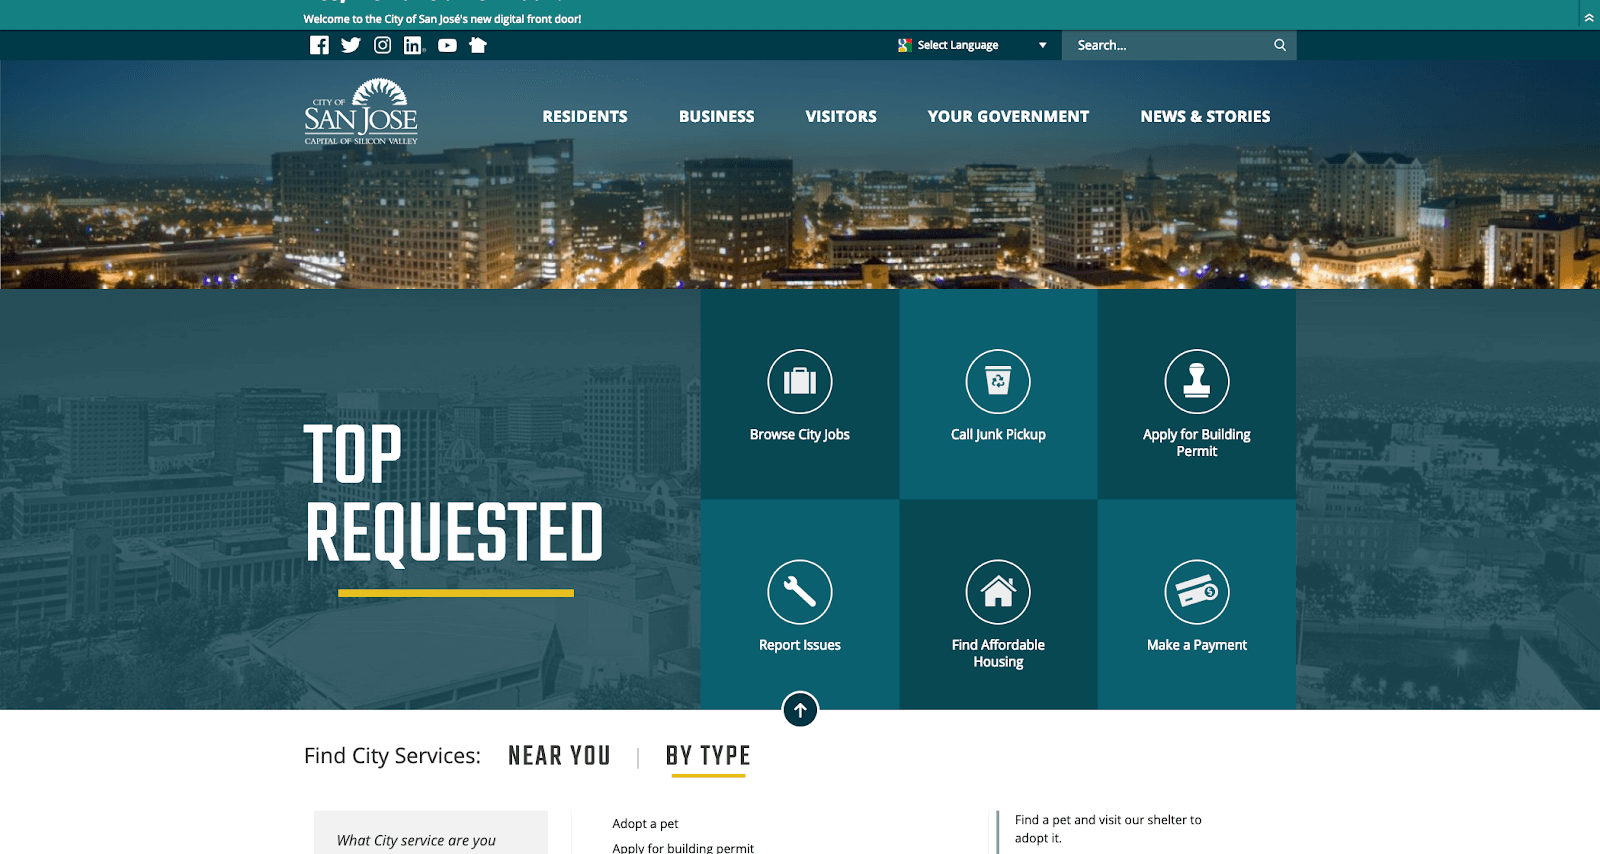 A screenshot of San Jose's website